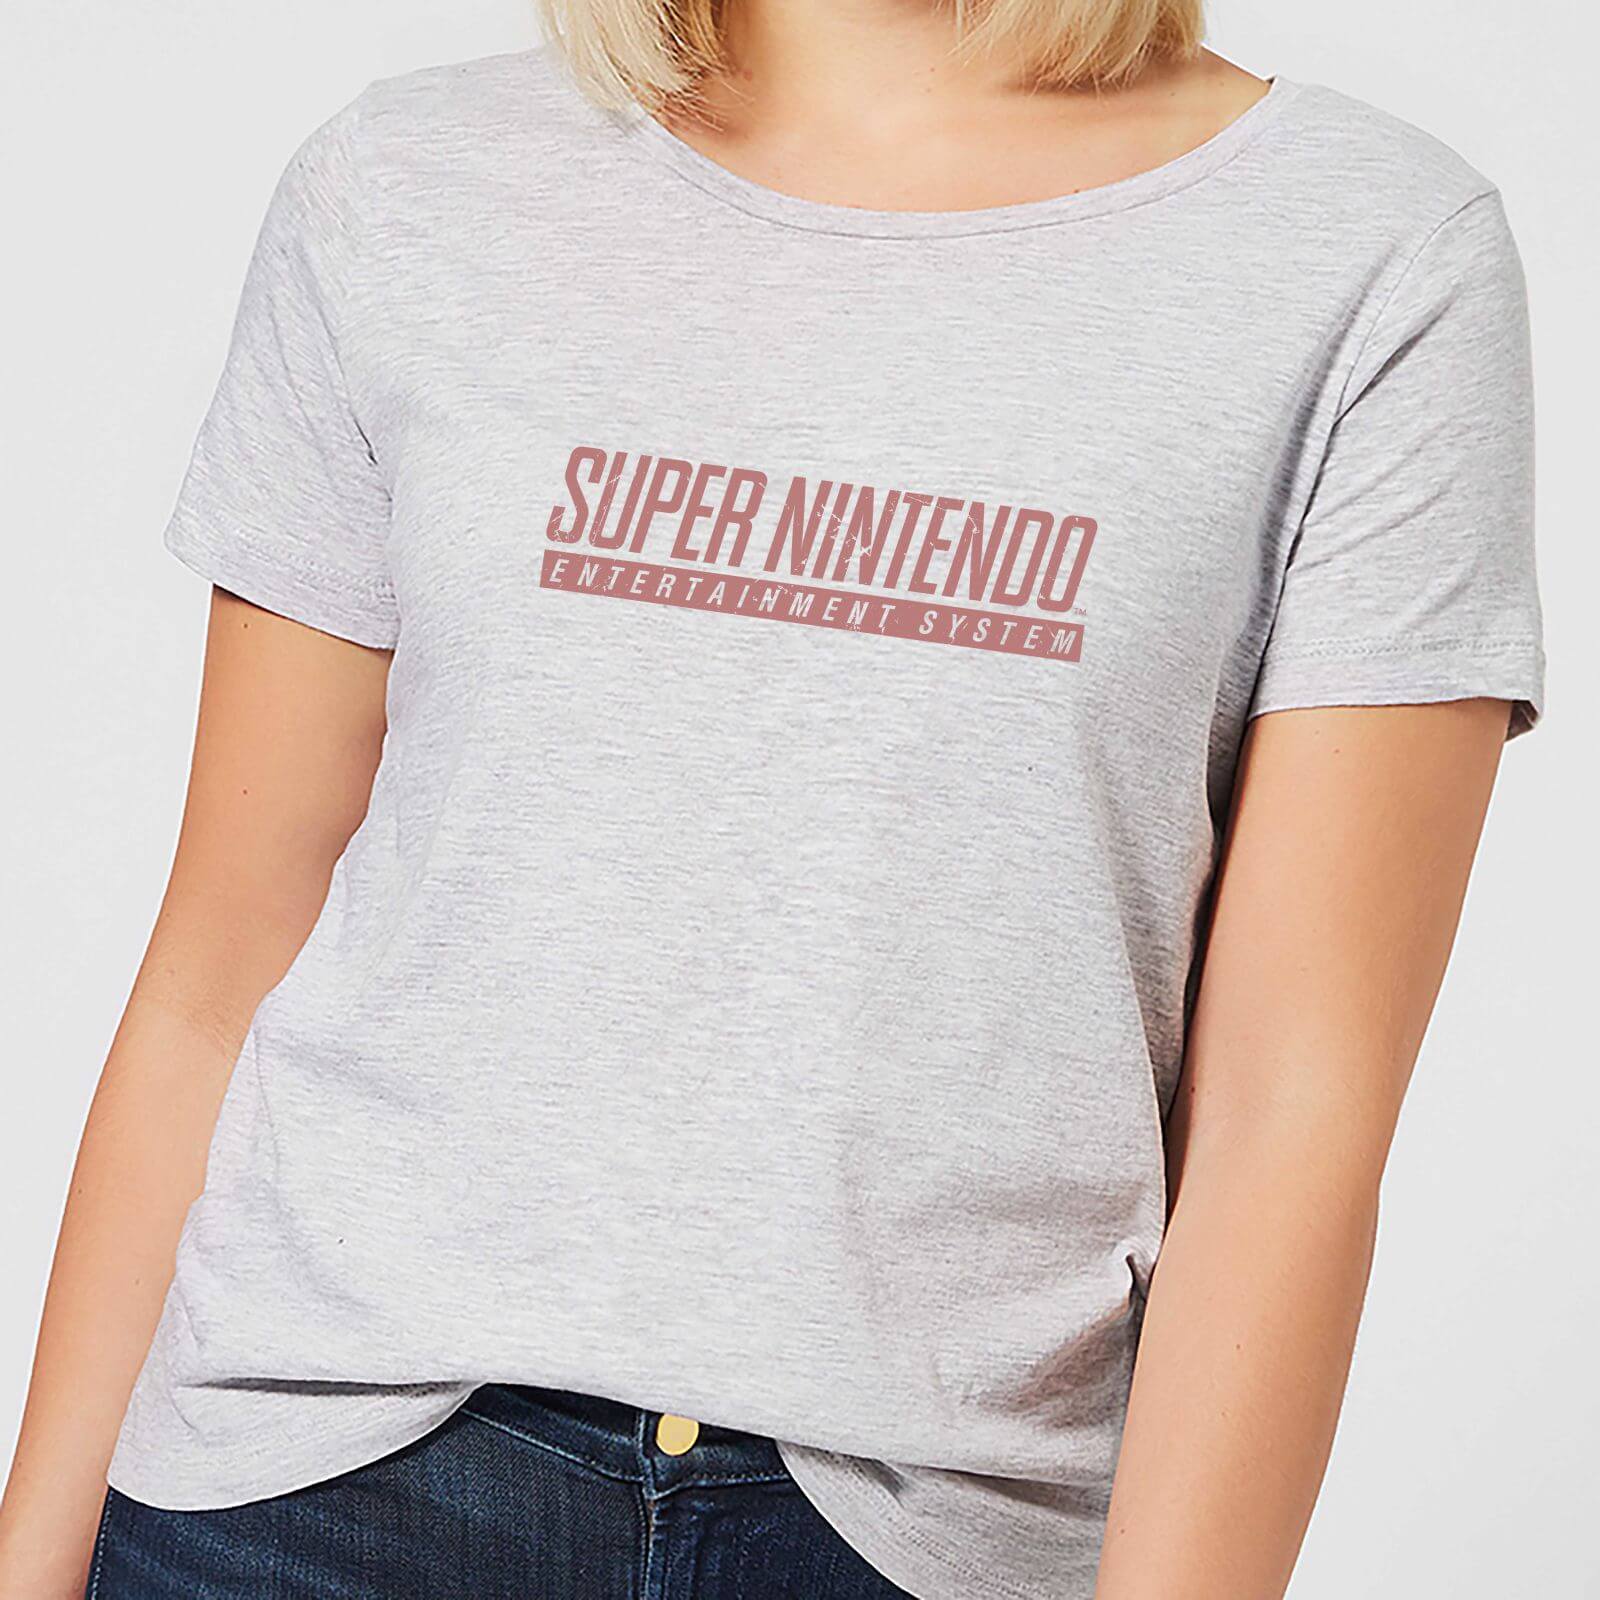 Nintendo Super Nintendo SNES Men's Women's T-Shirt - Grey - M - Grey